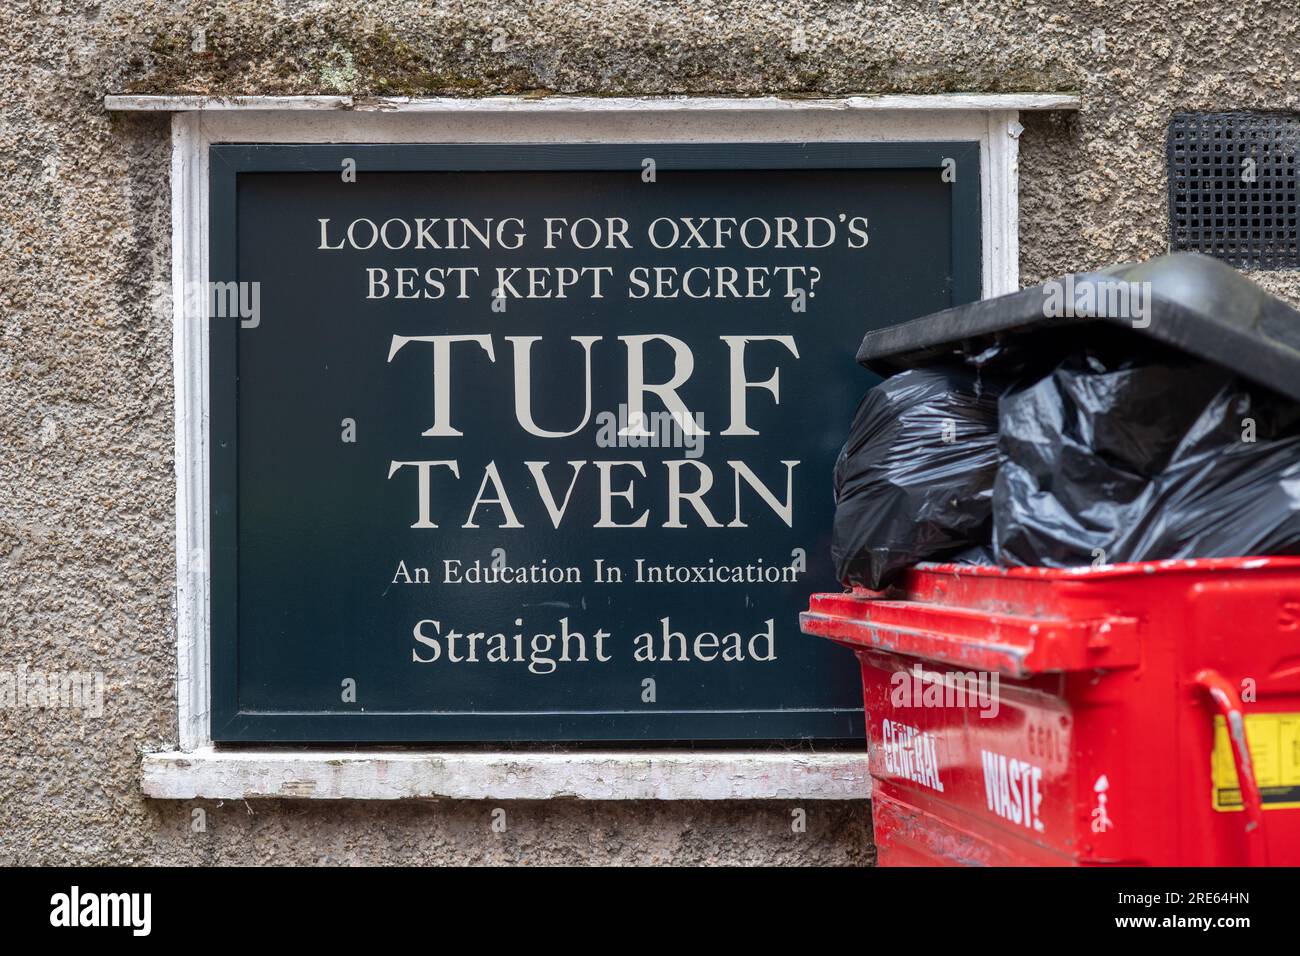 Tavern Turf, Oxford - signe Banque D'Images